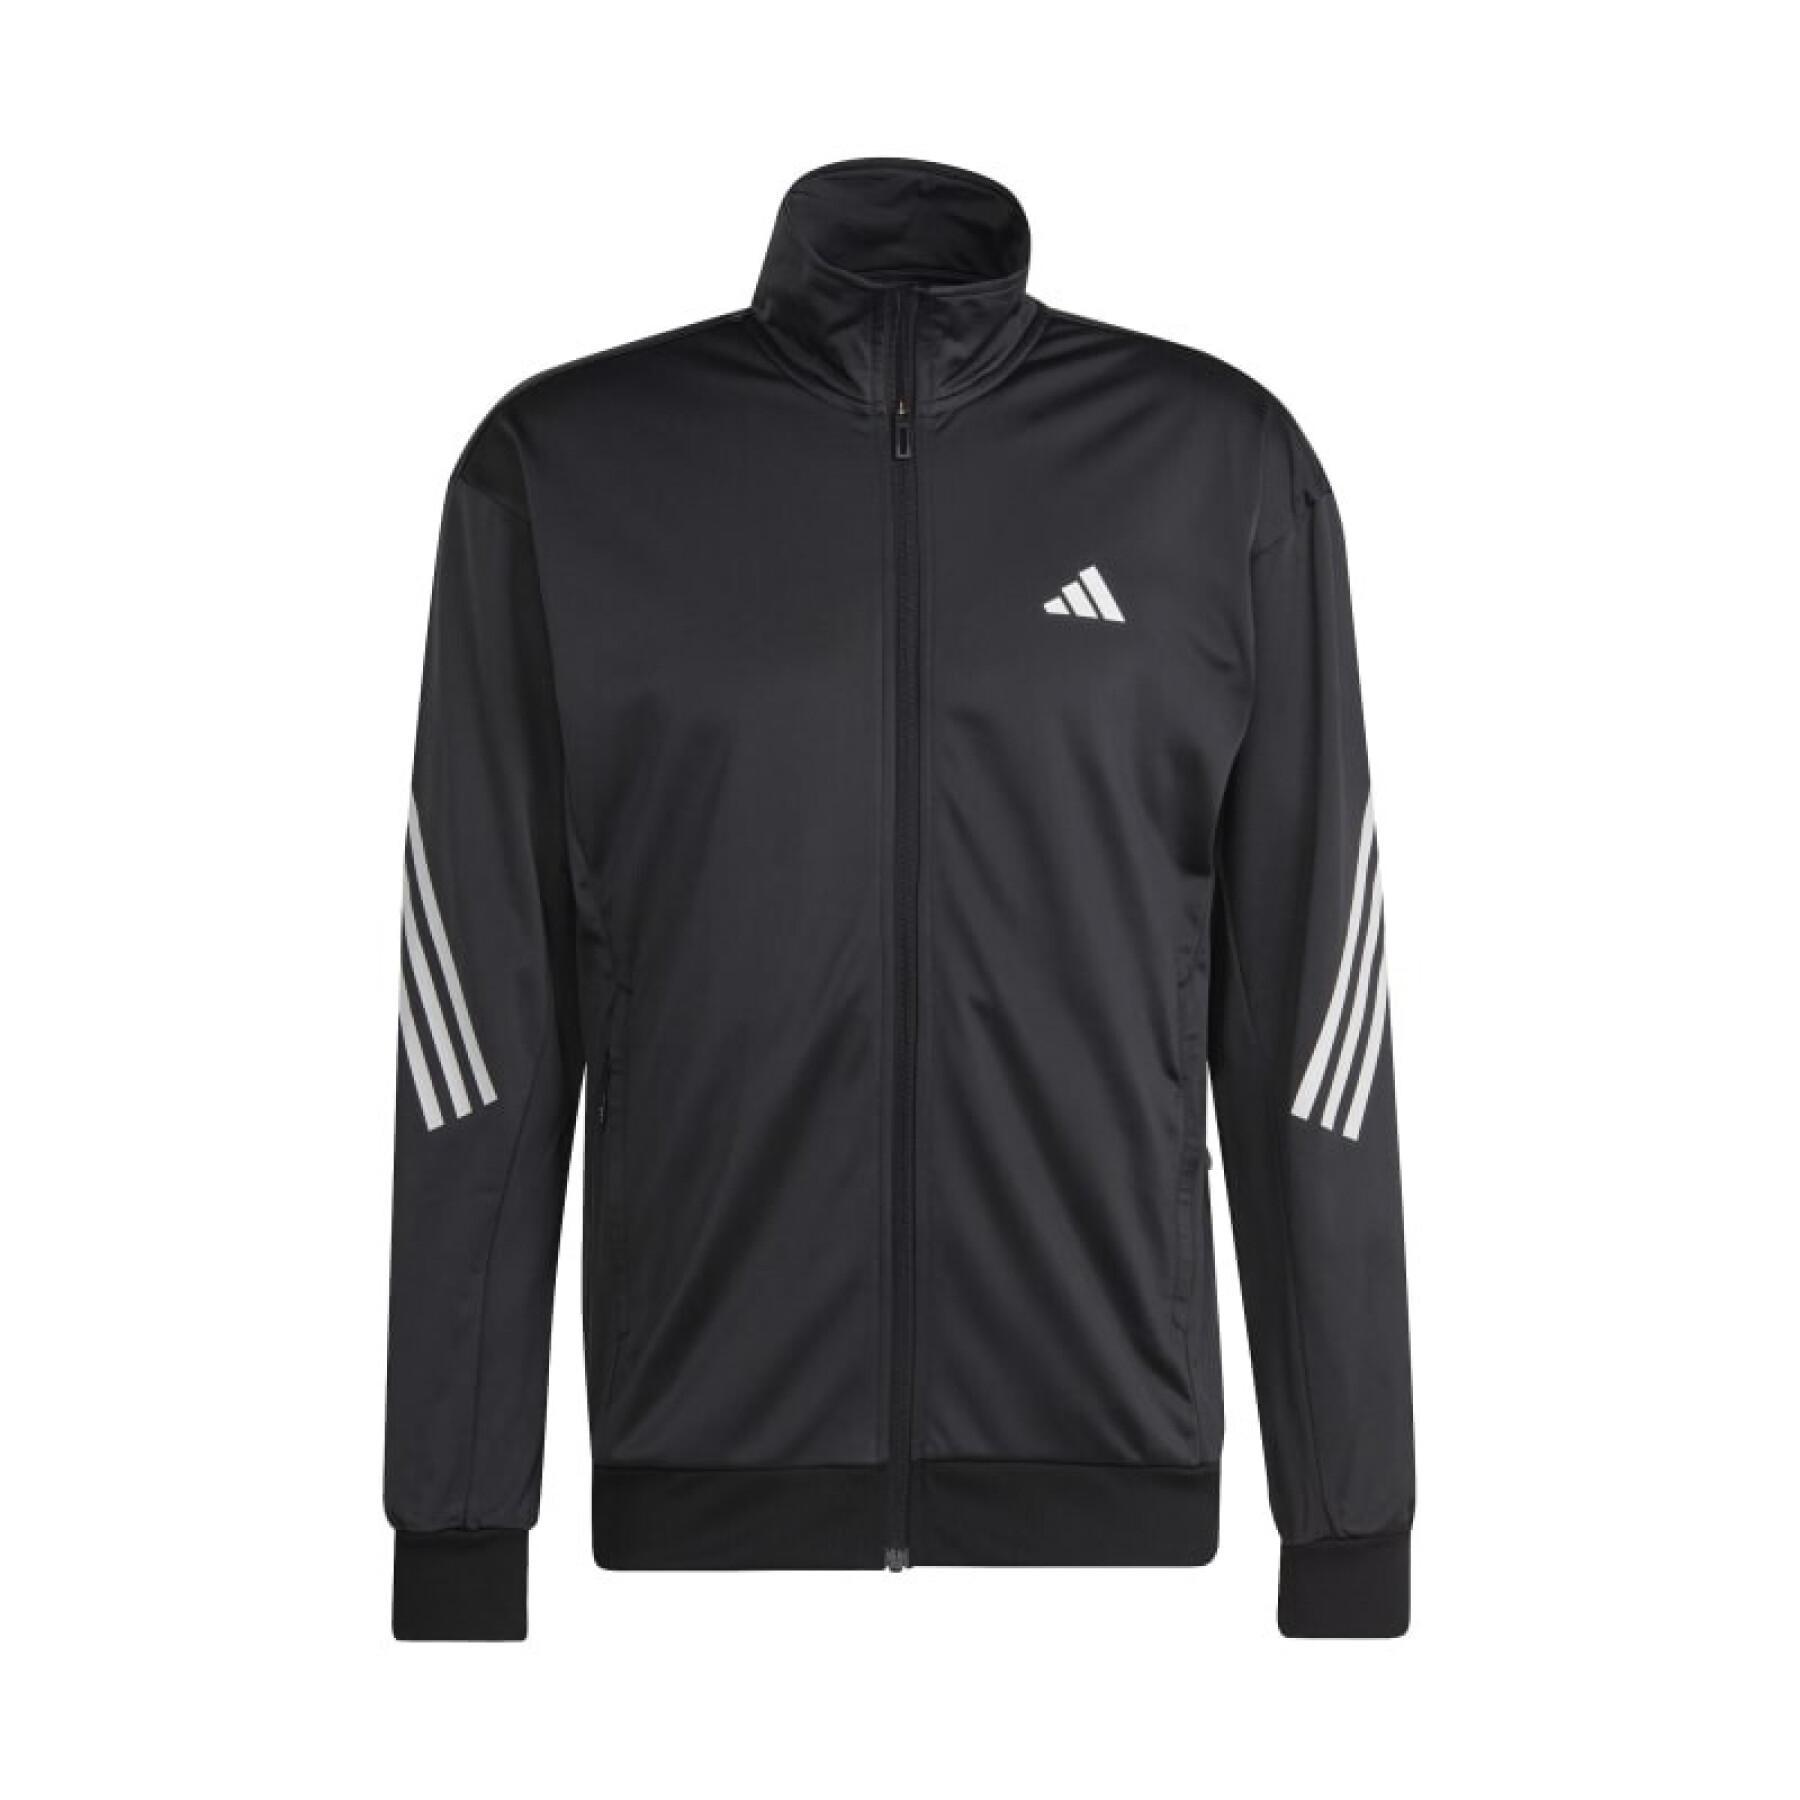 Sweat jacket adidas 3S